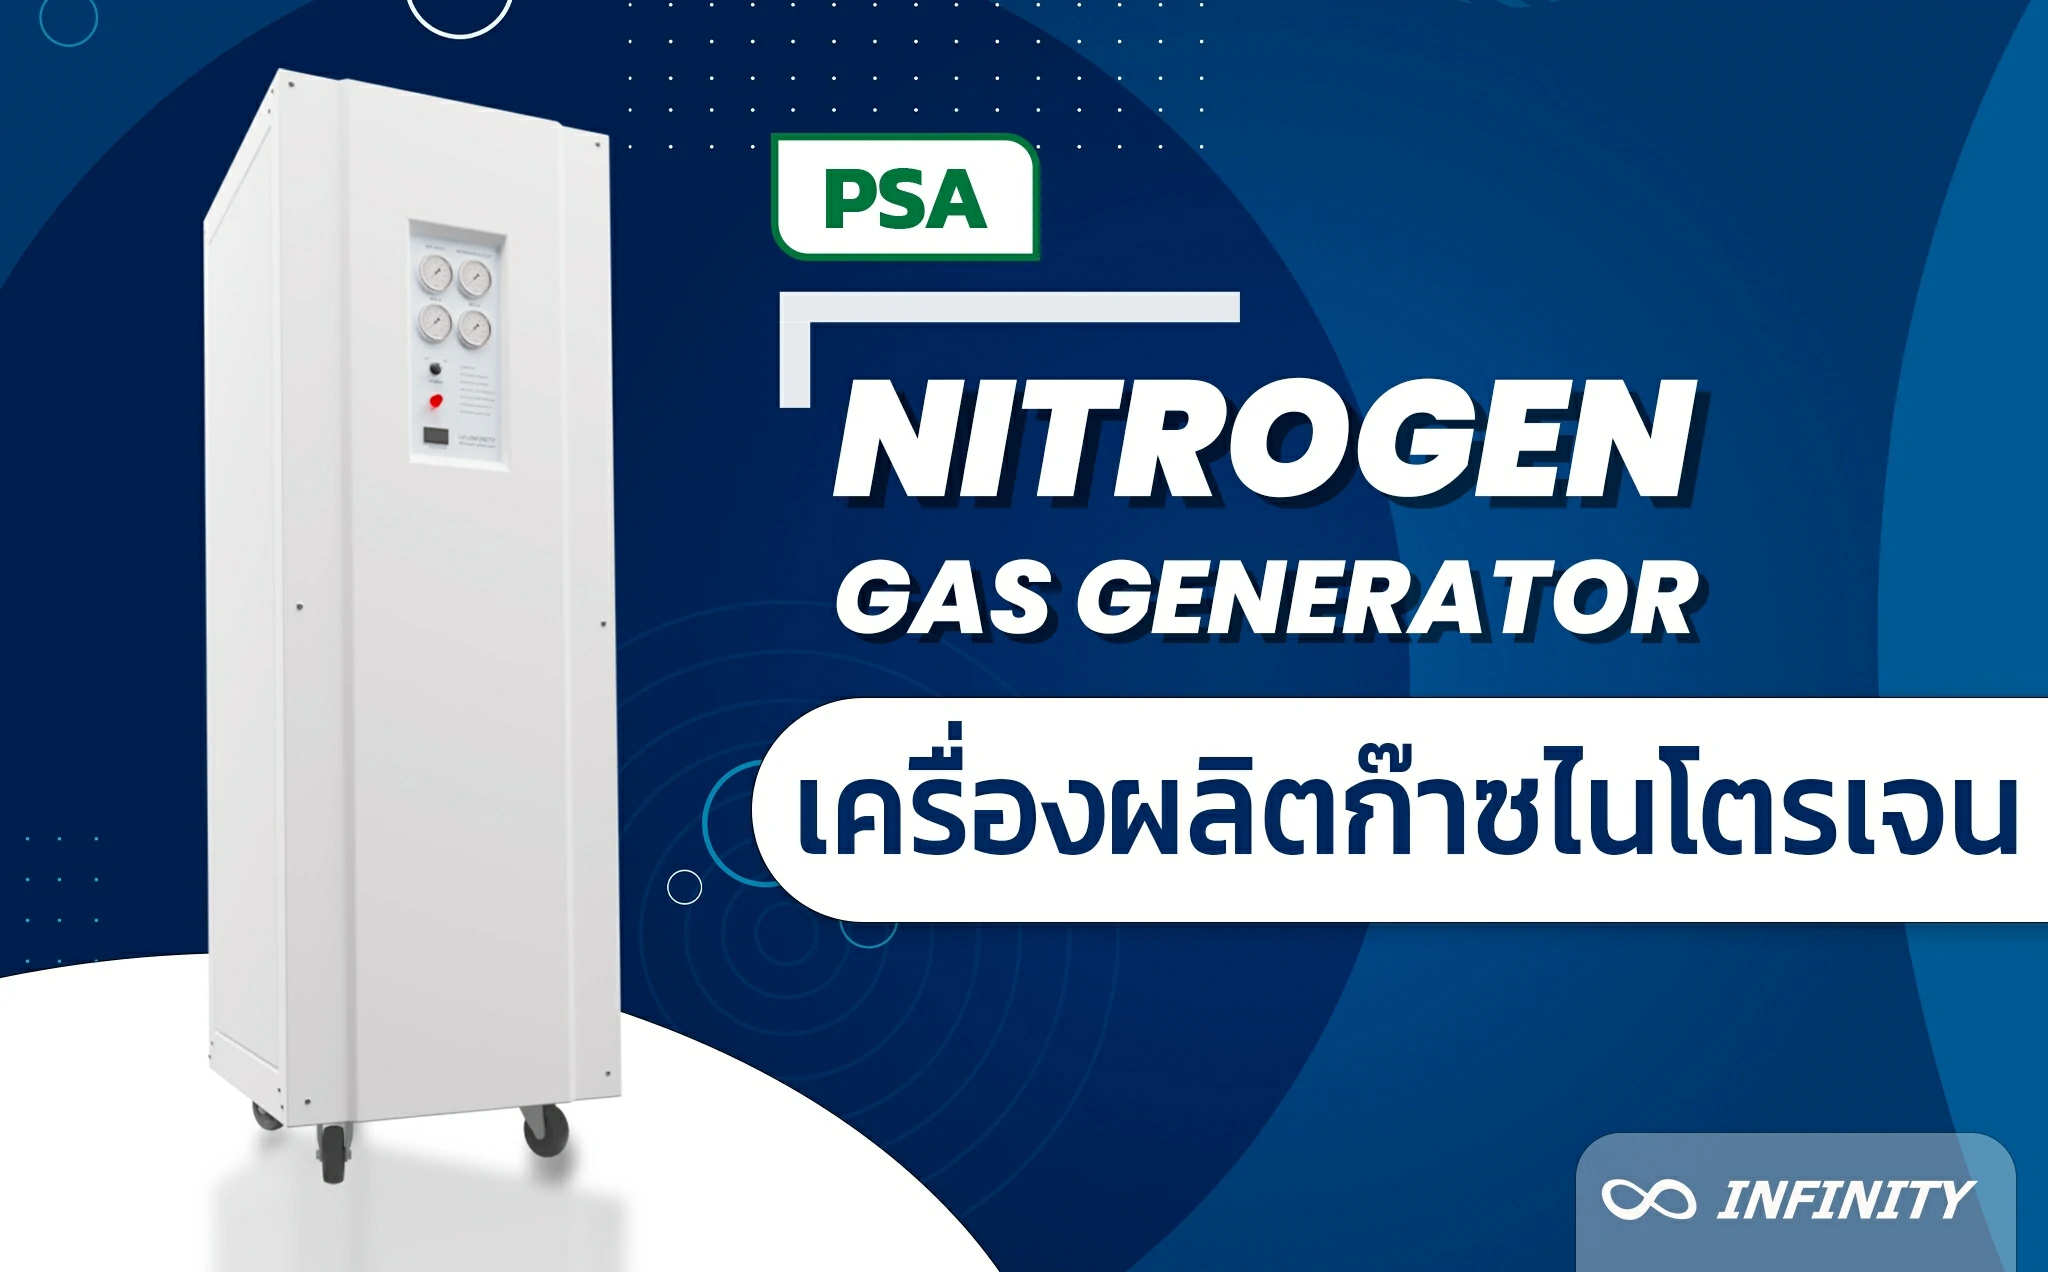 Nitrogen Gas Generator (PSA)